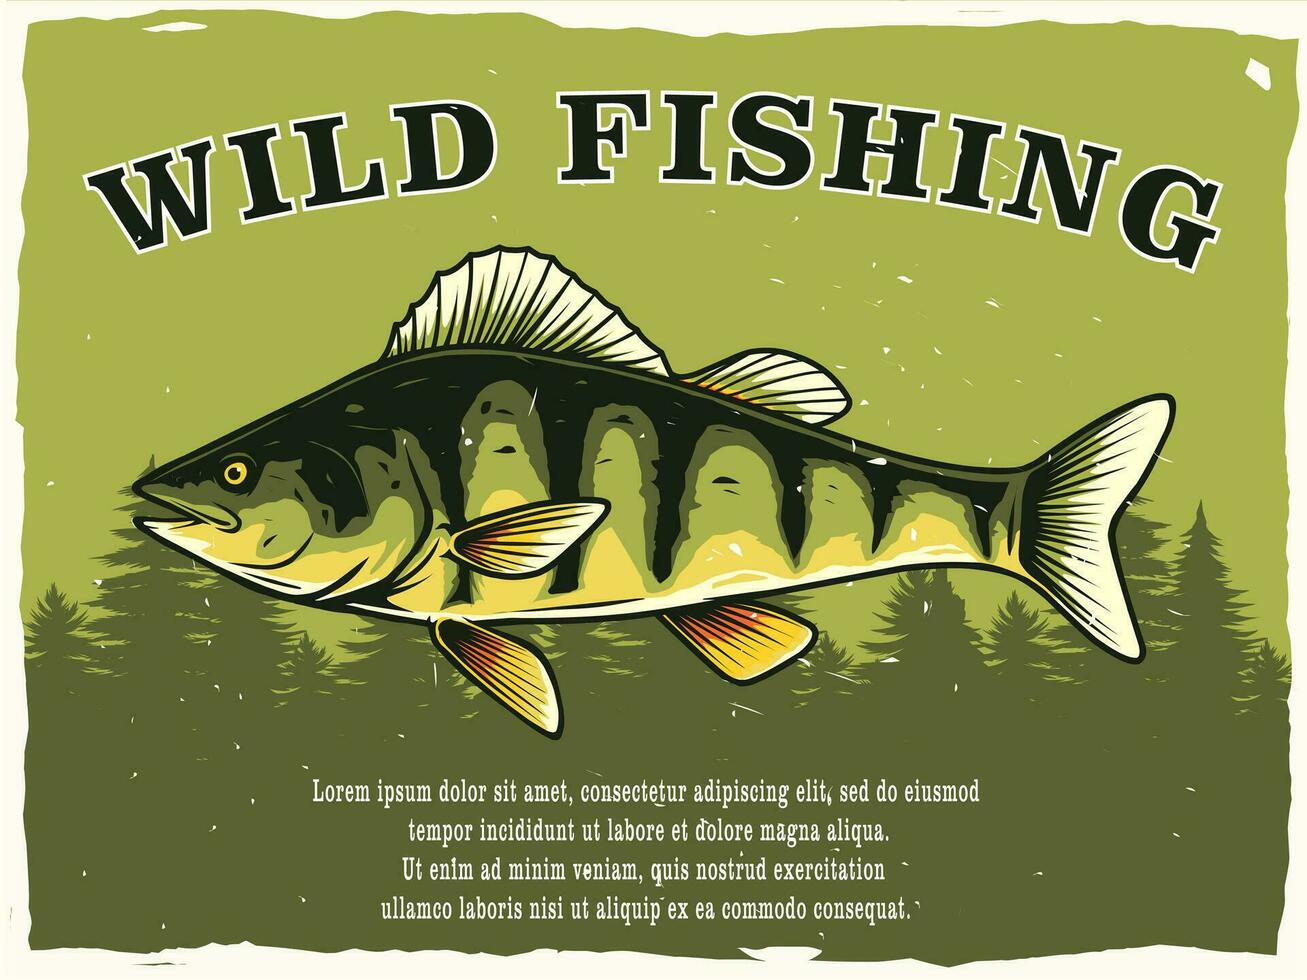 wild perch fishing poster design vector